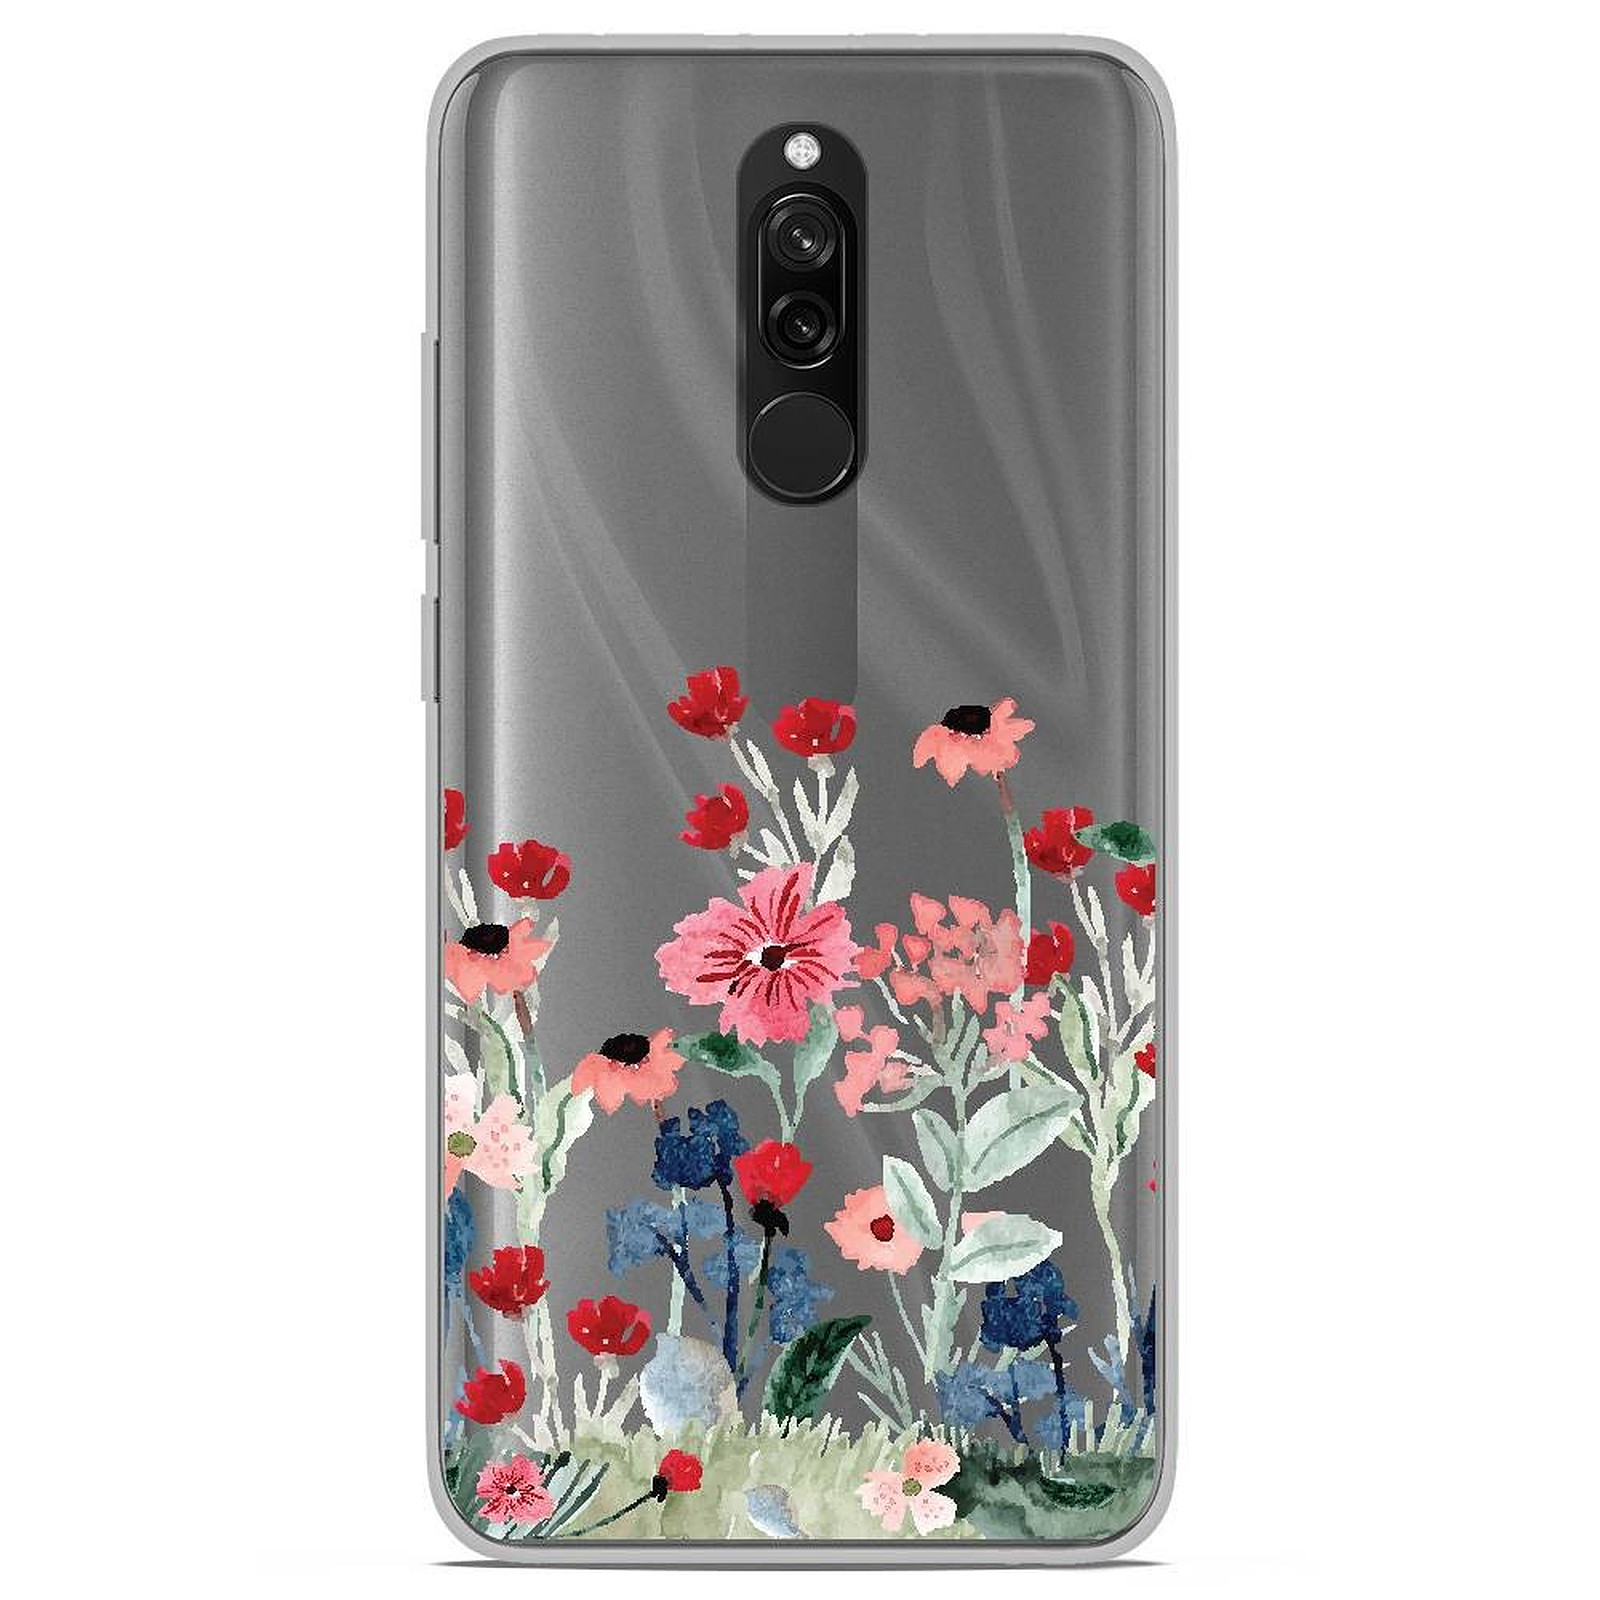 1001 Coques Coque silicone gel Xiaomi Redmi 7 motif Printemps en fleurs - Coque telephone 1001Coques